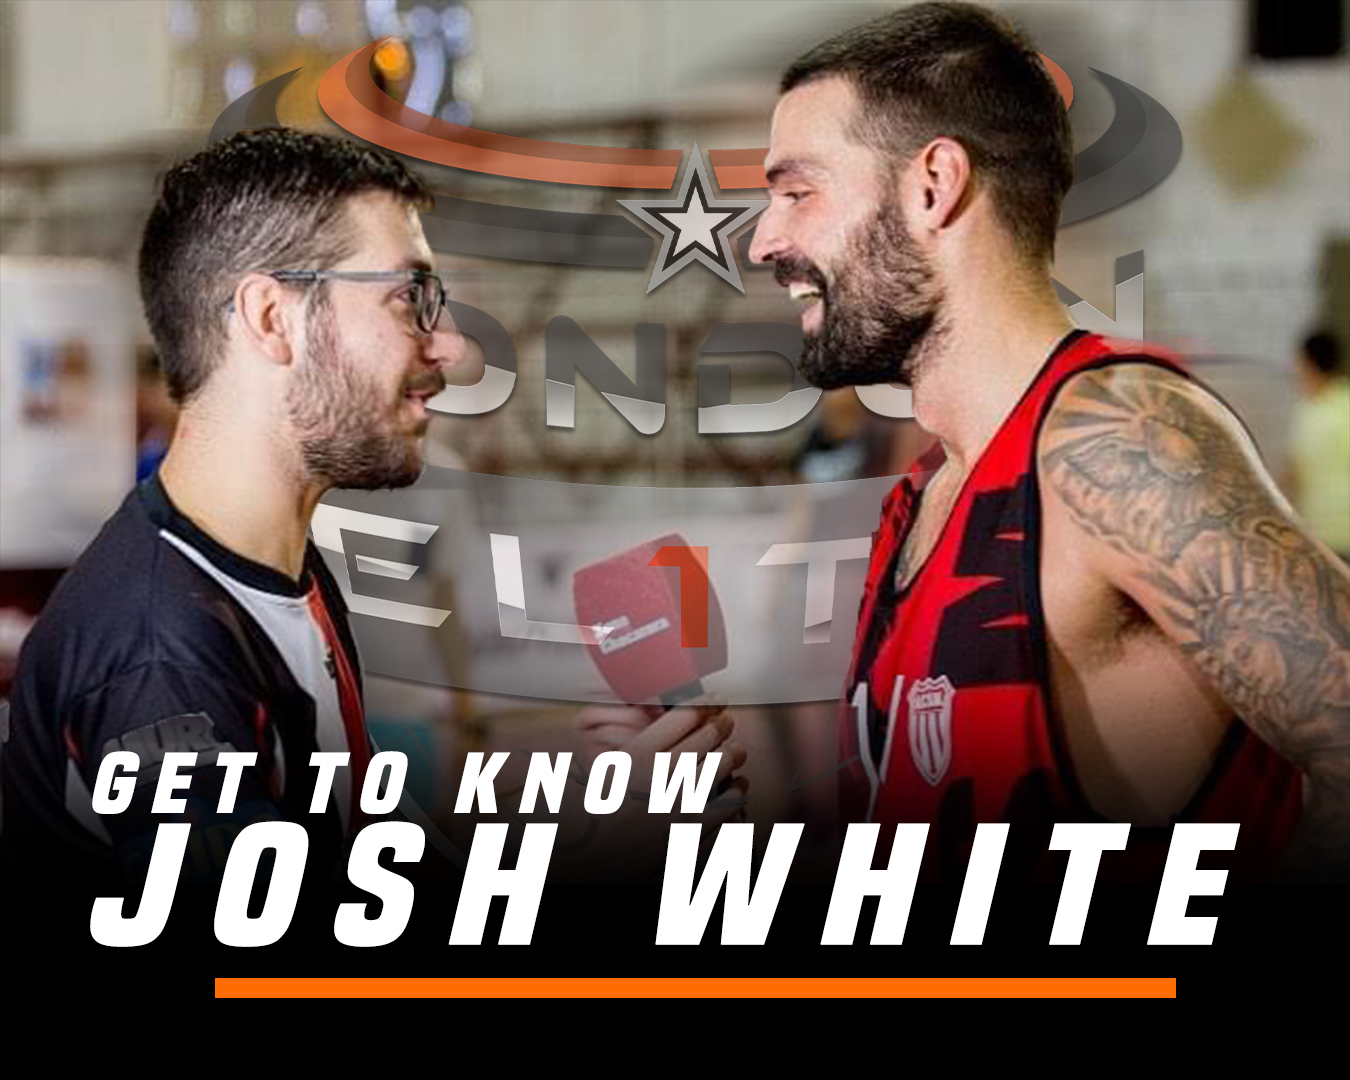 Get to know Josh White